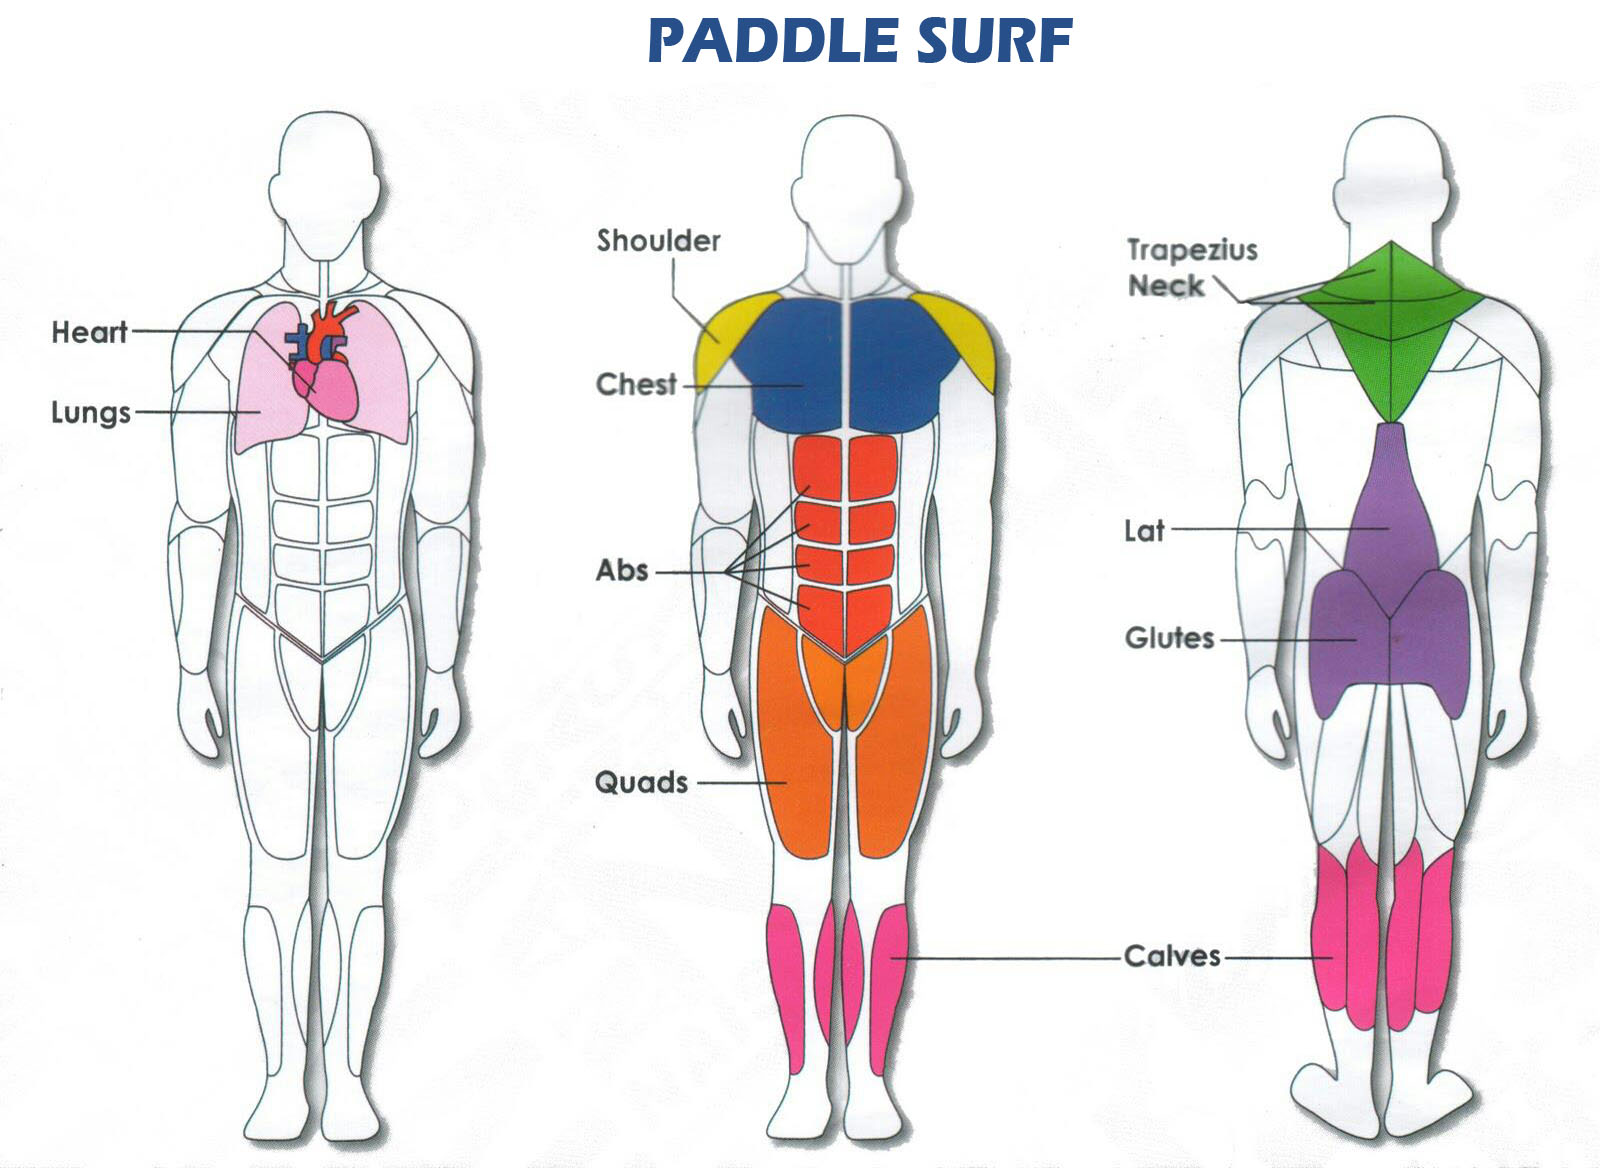 trabajo-paddle-surf